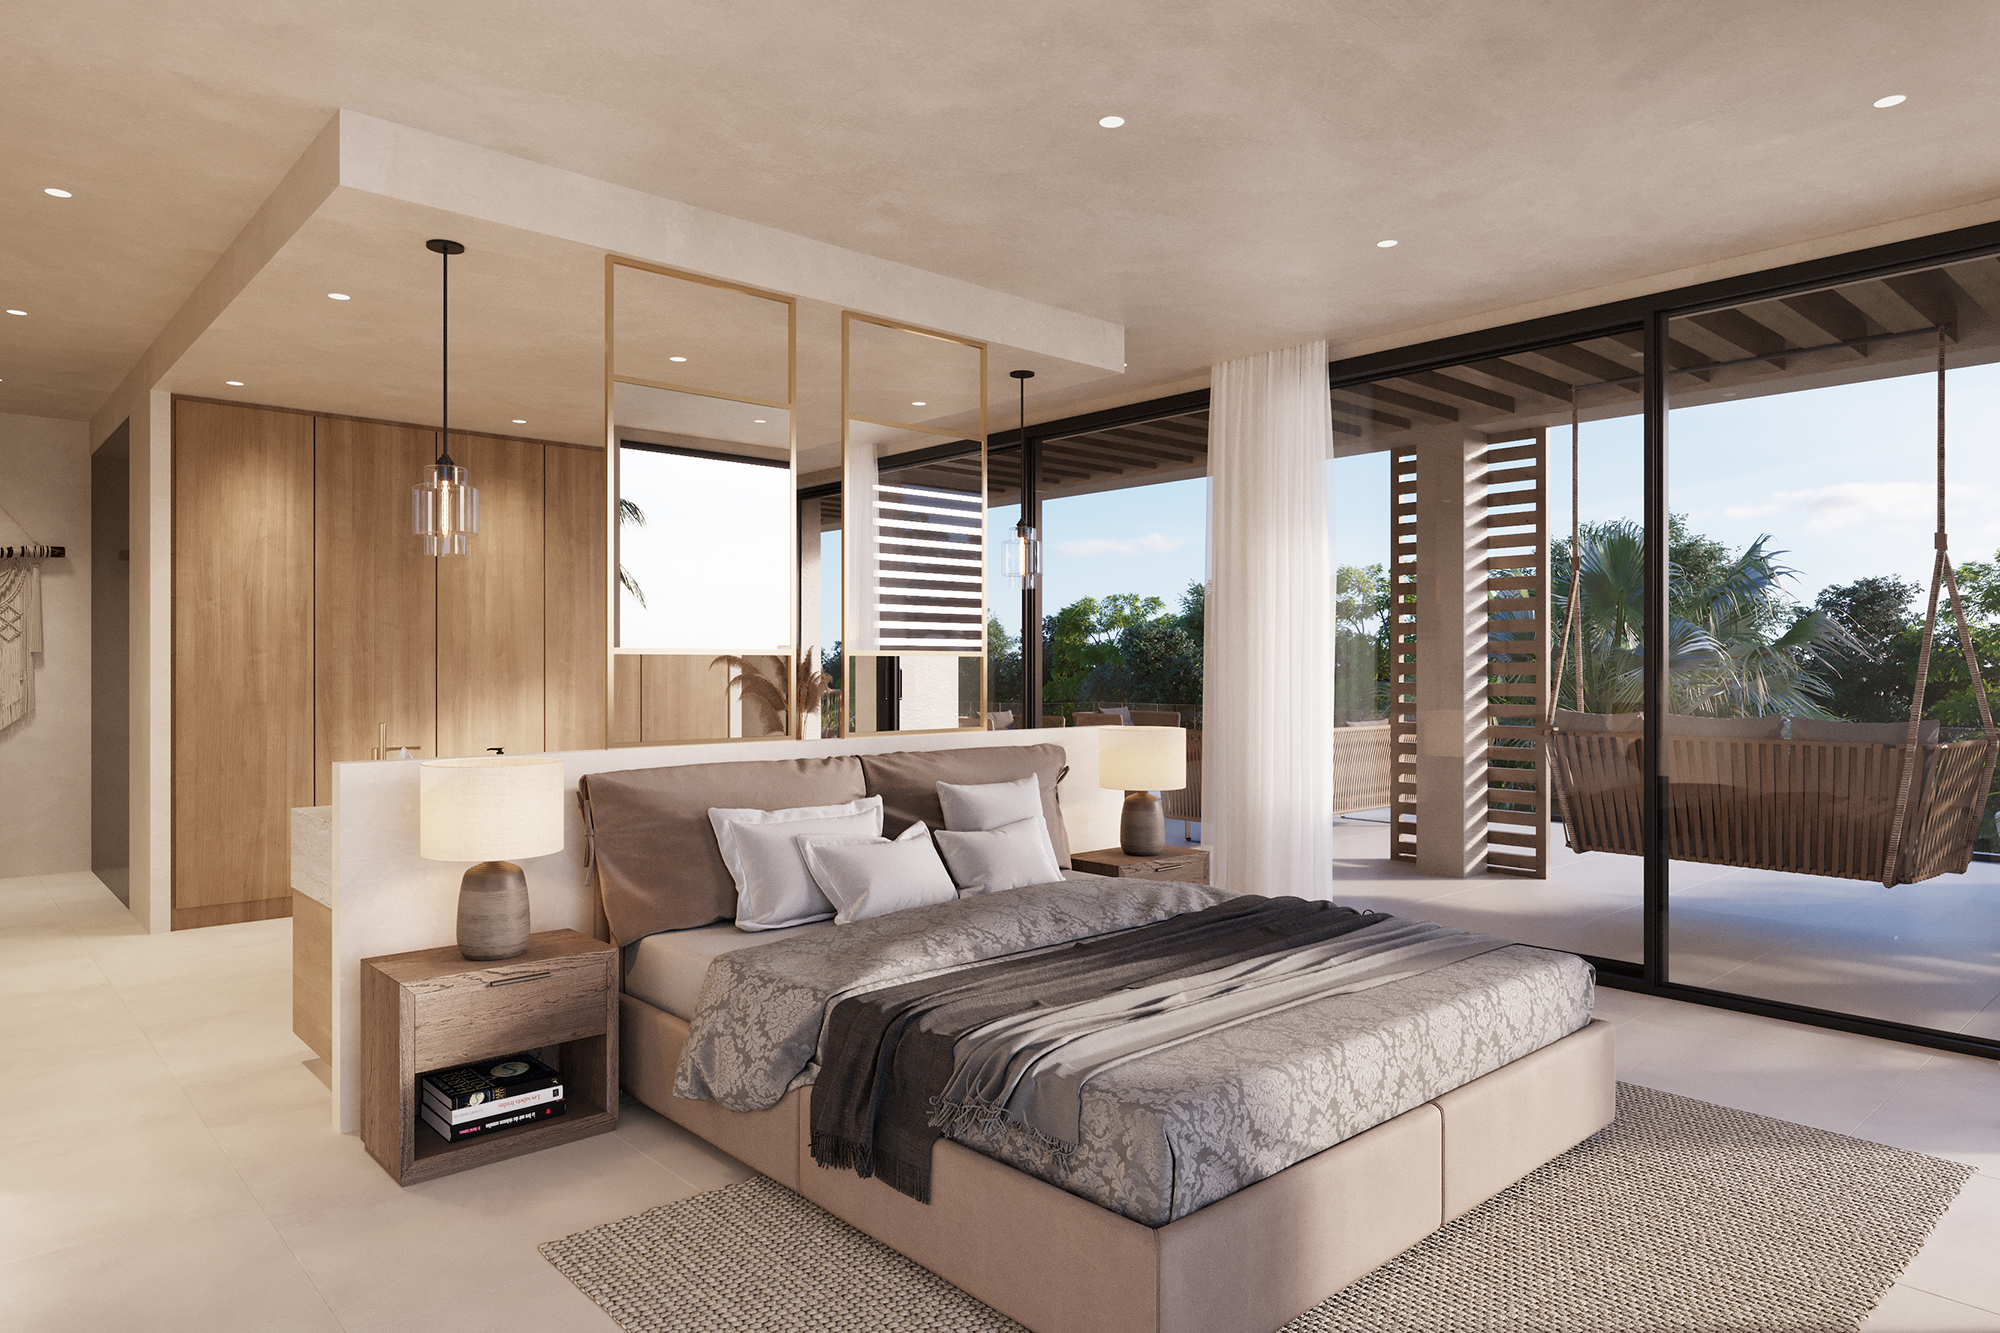 Calming, light-filled bedroom of a luxury villa in Ibiza